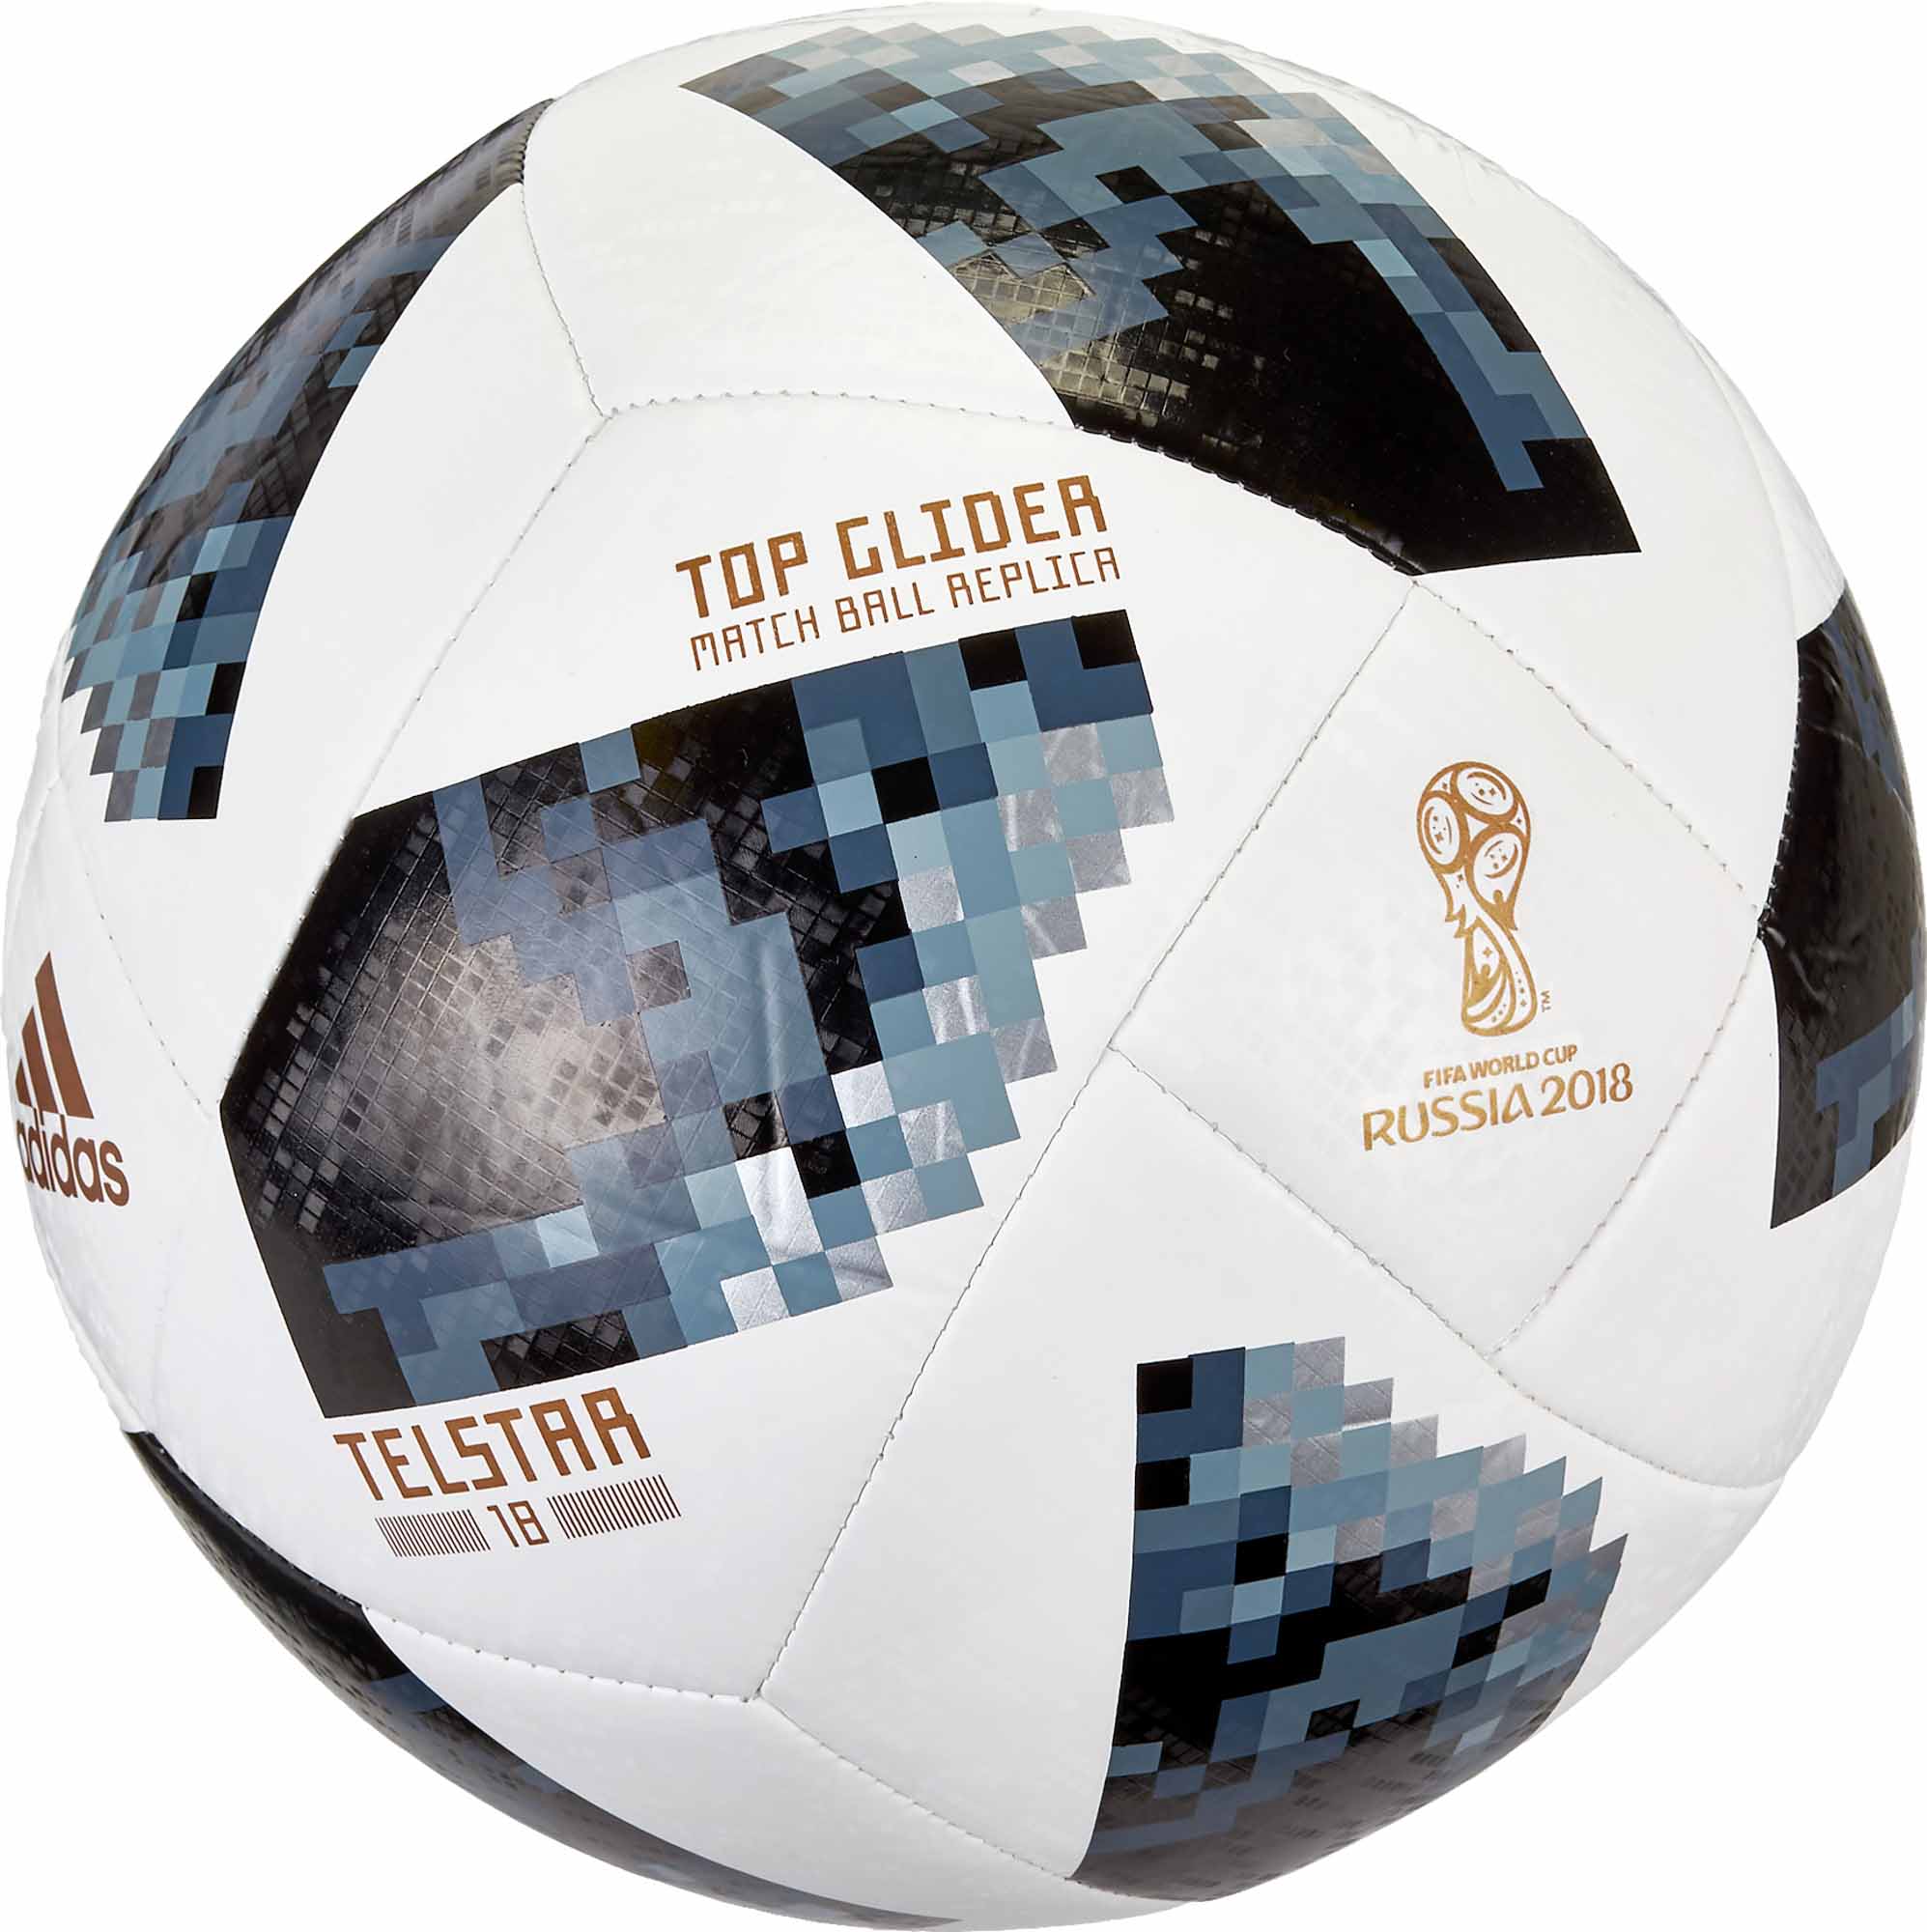 adidas world cup glider soccer ball